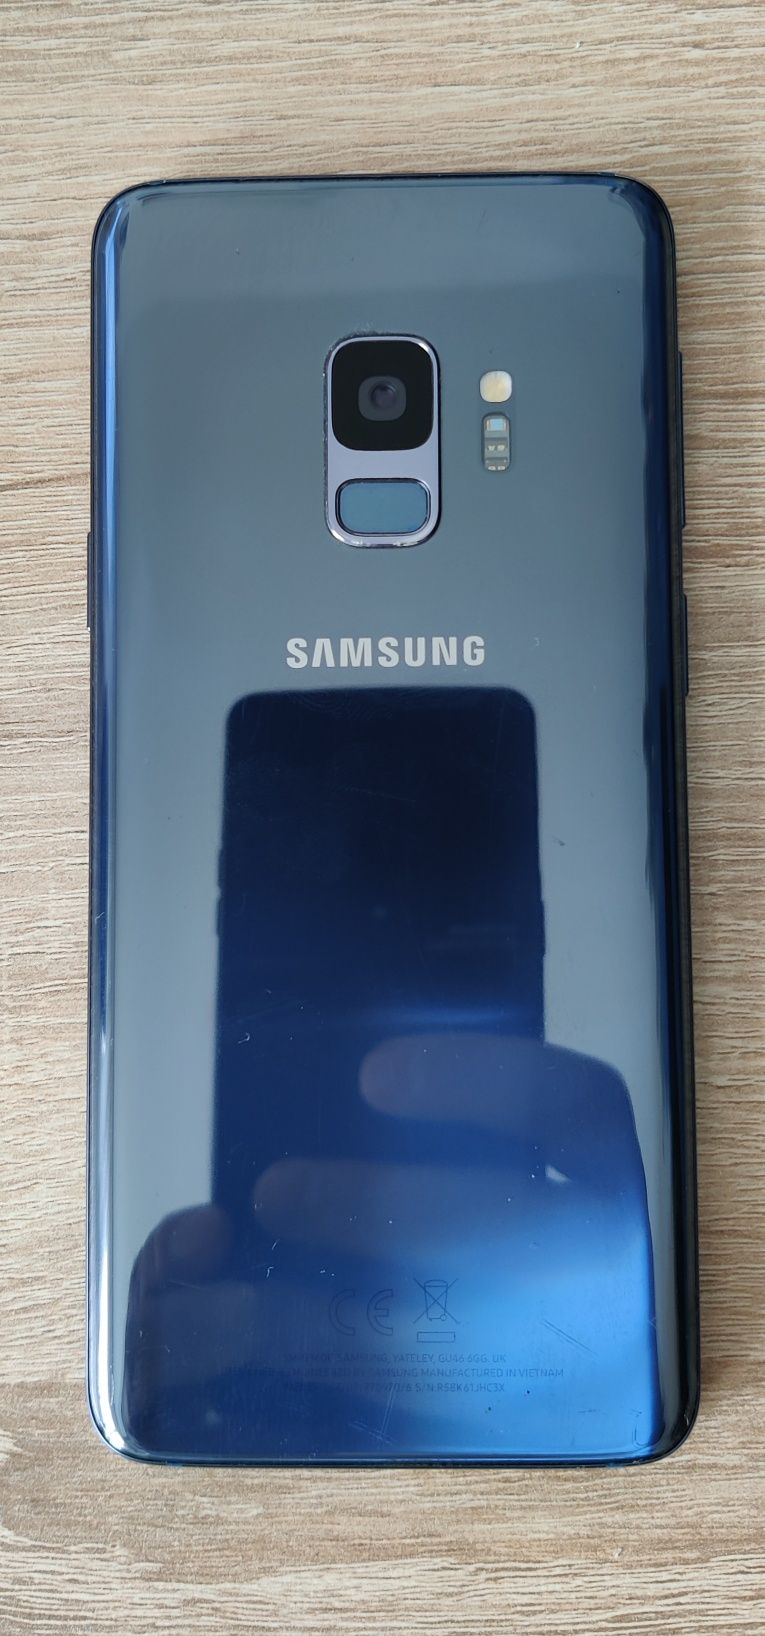 Samsung S9 64gb full box